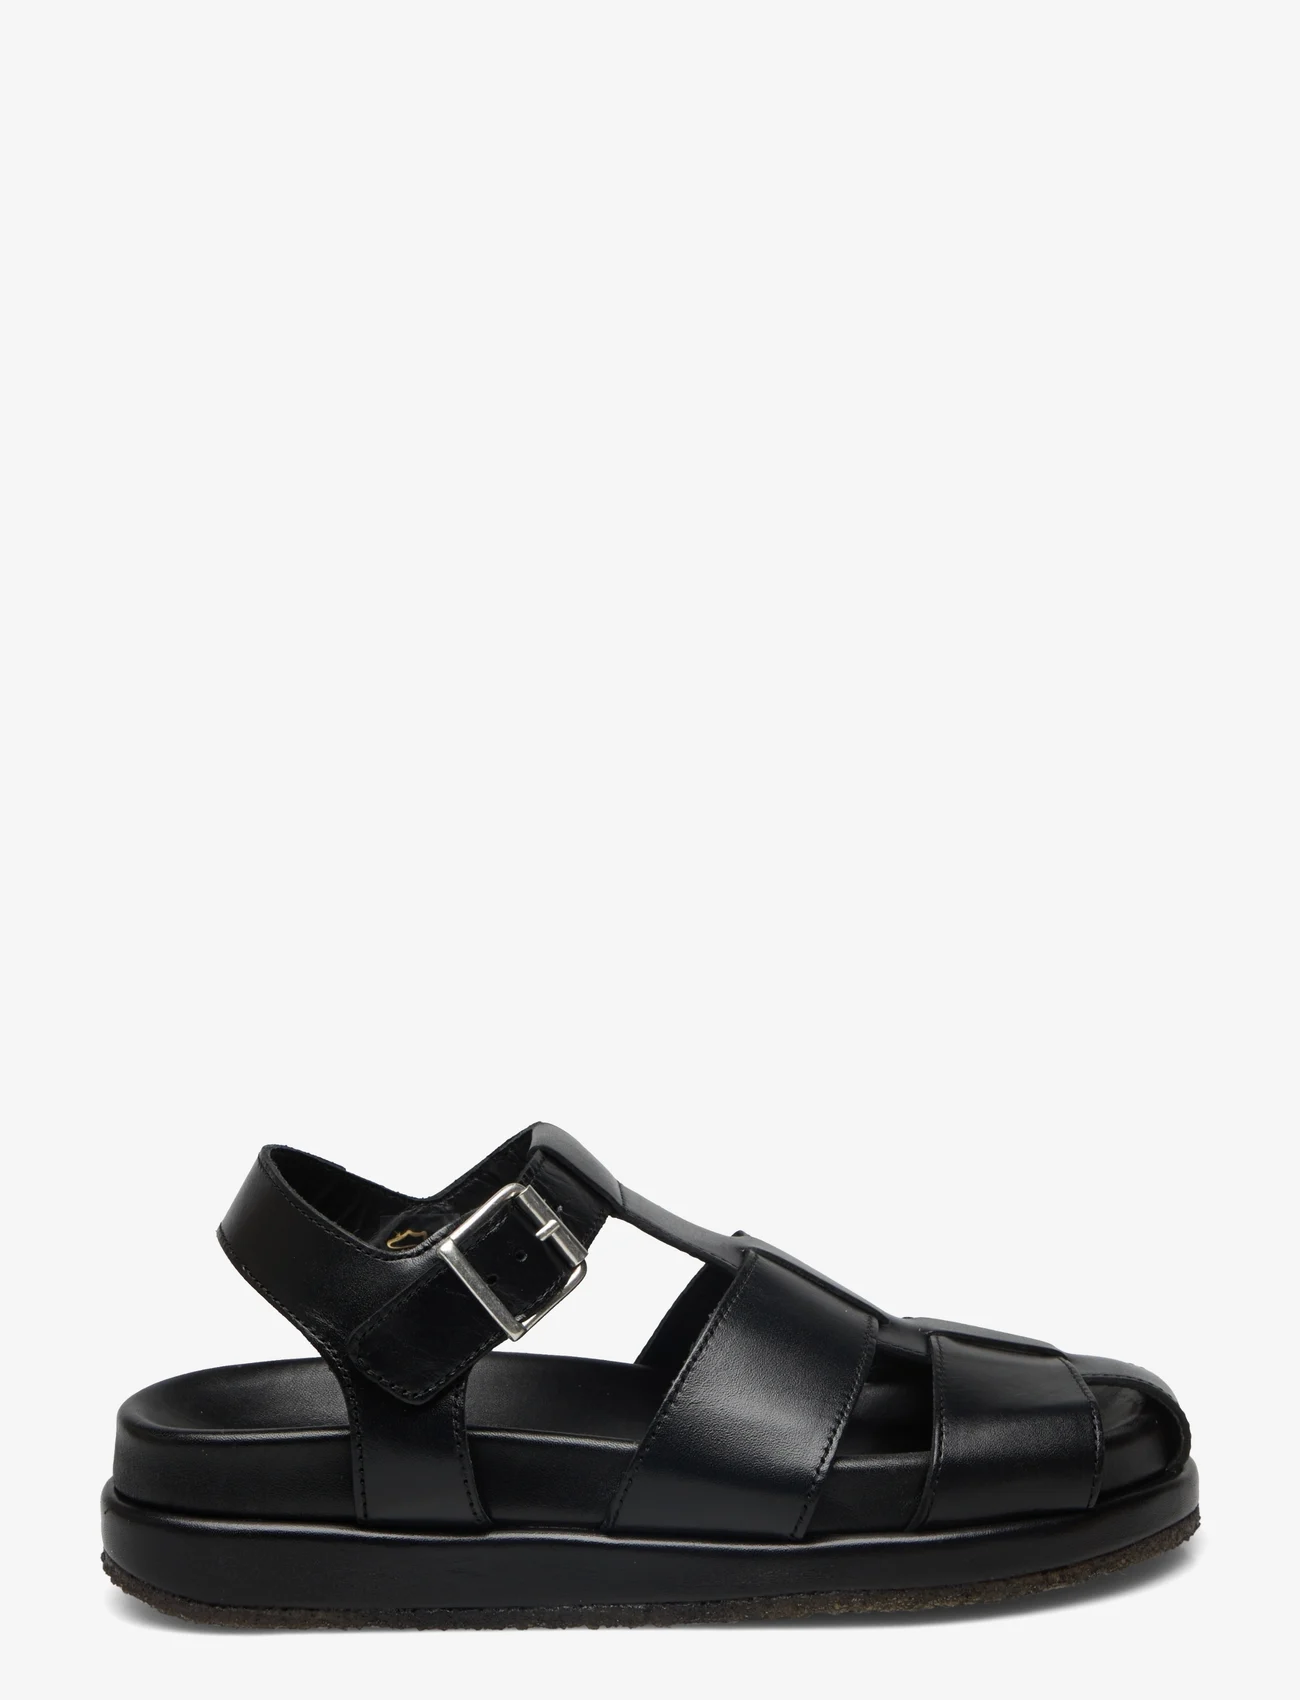 ANGULUS - Sandals - flat - open toe - op - flat sandals - 1604/1785 black - 1